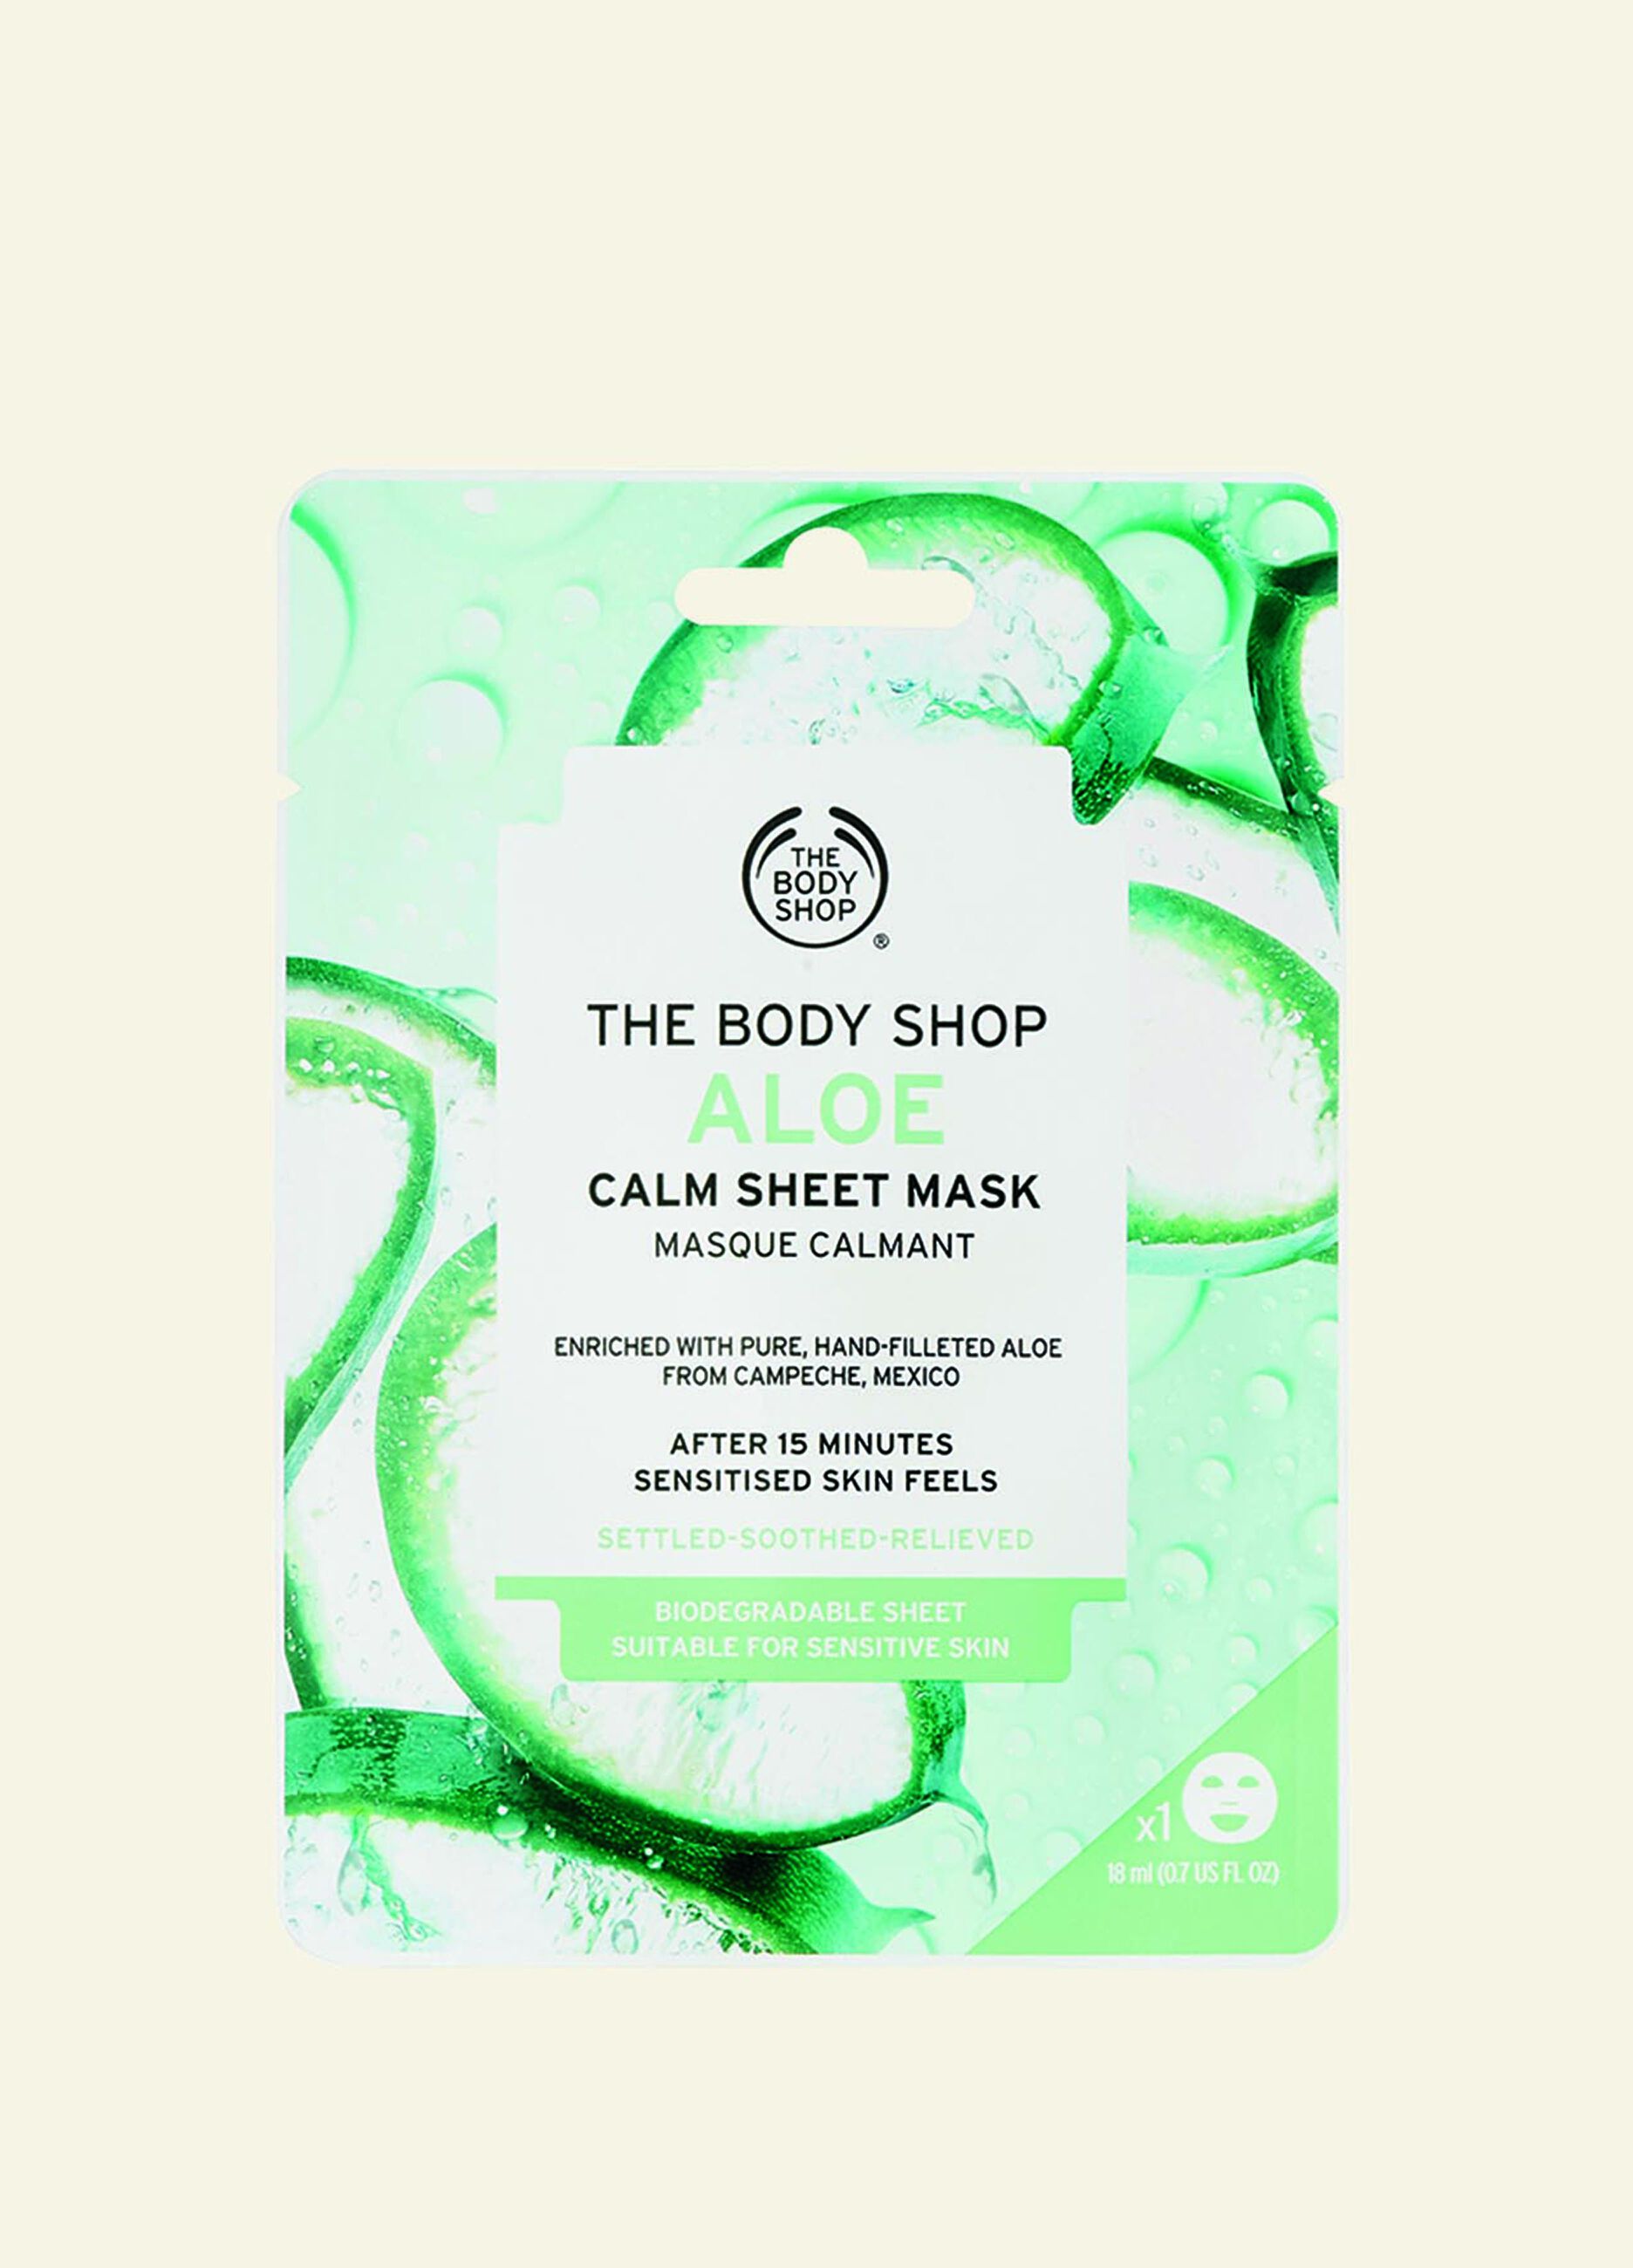 The Body Shop moisturising fabric mask with aloe